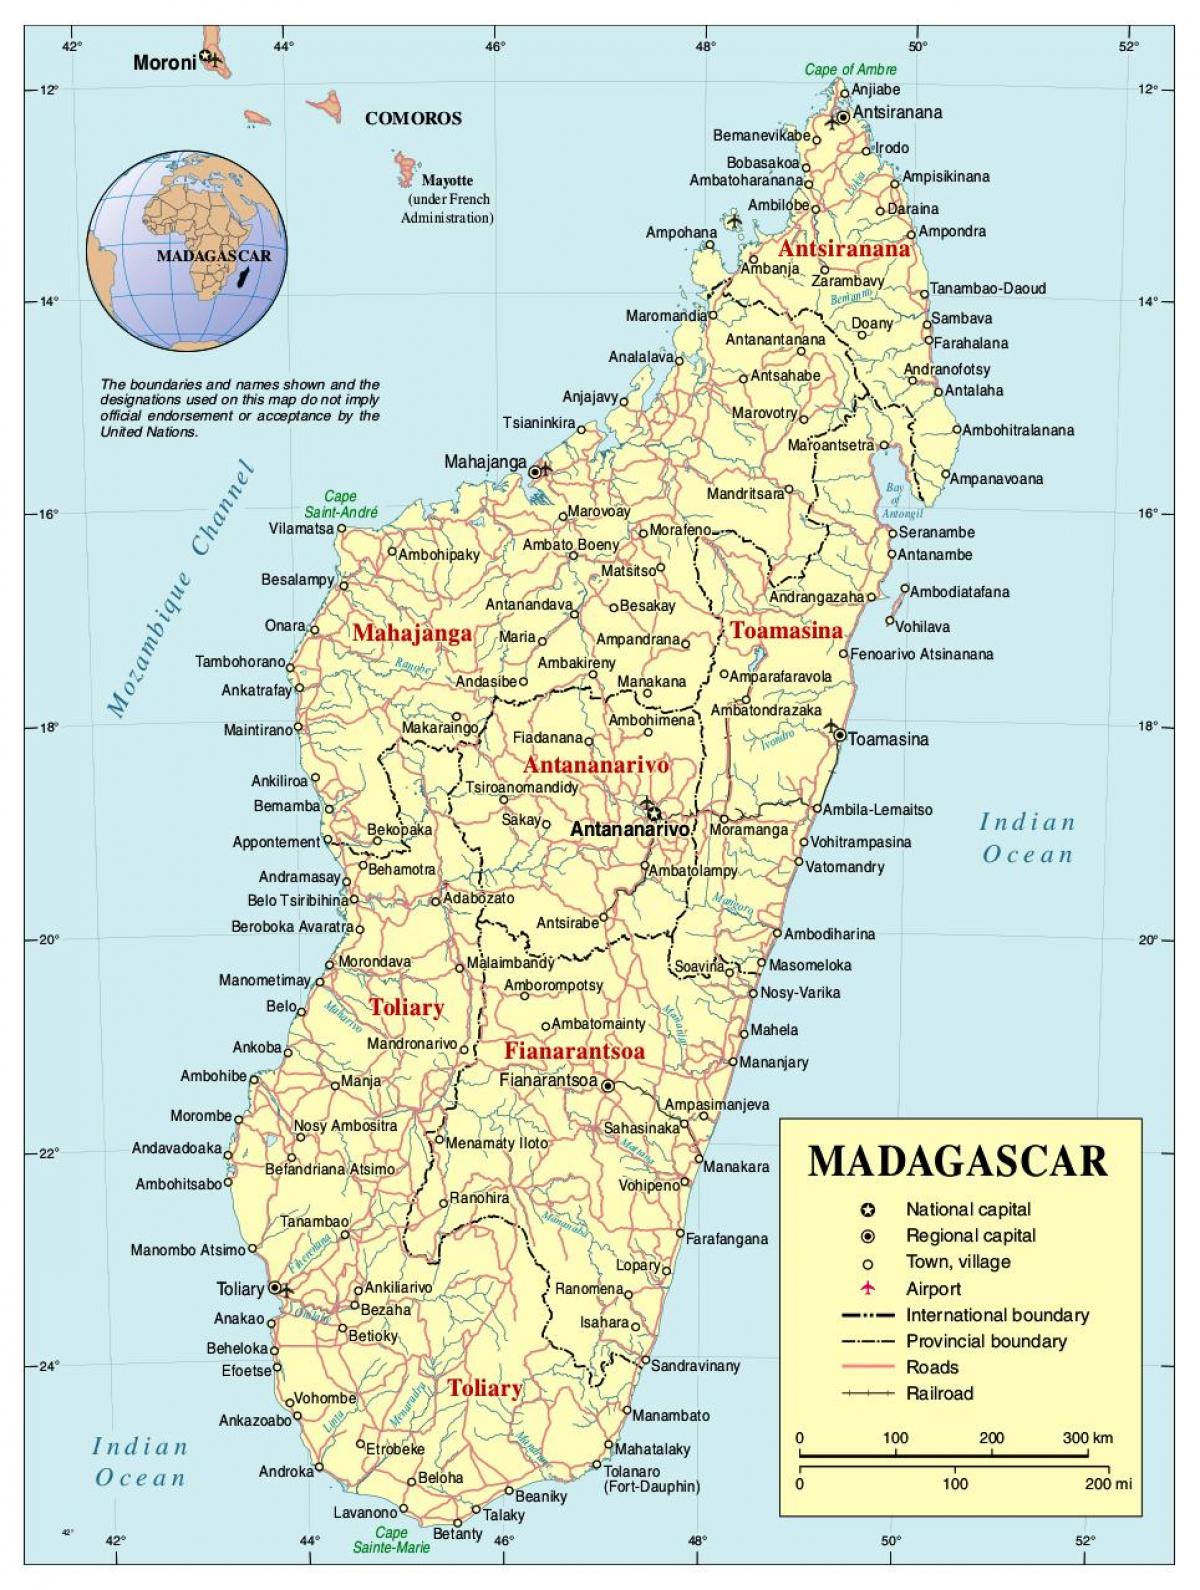 Madagaskar yol haritası 